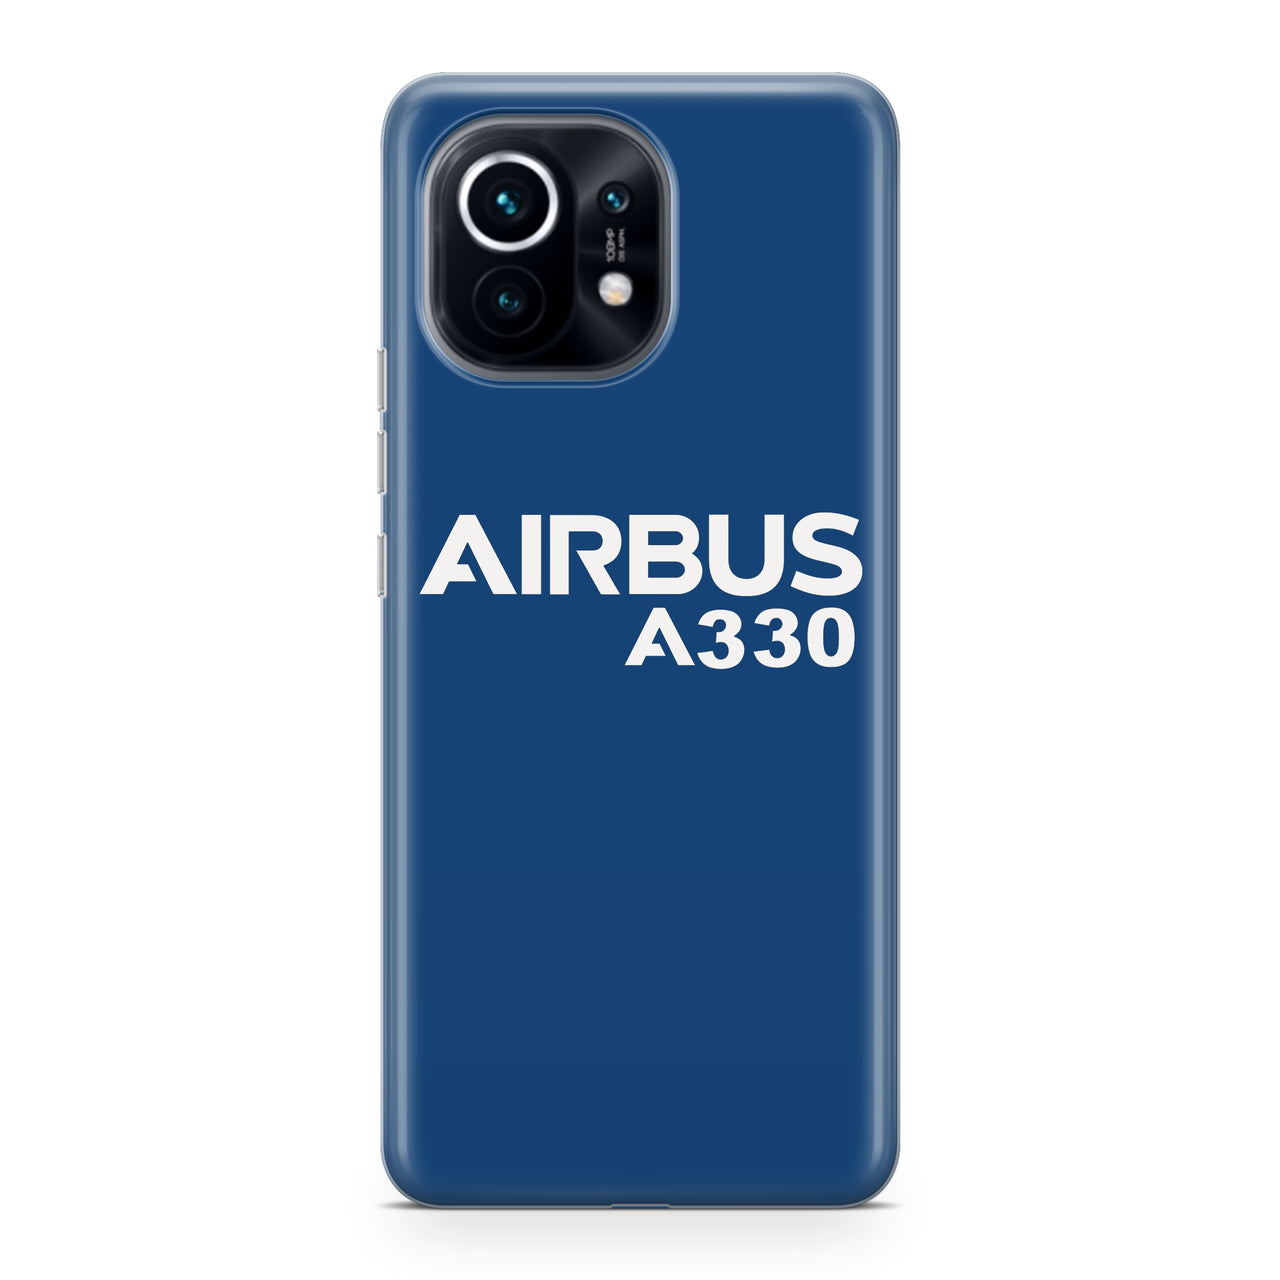 Airbus A330 & Text Designed Xiaomi Cases